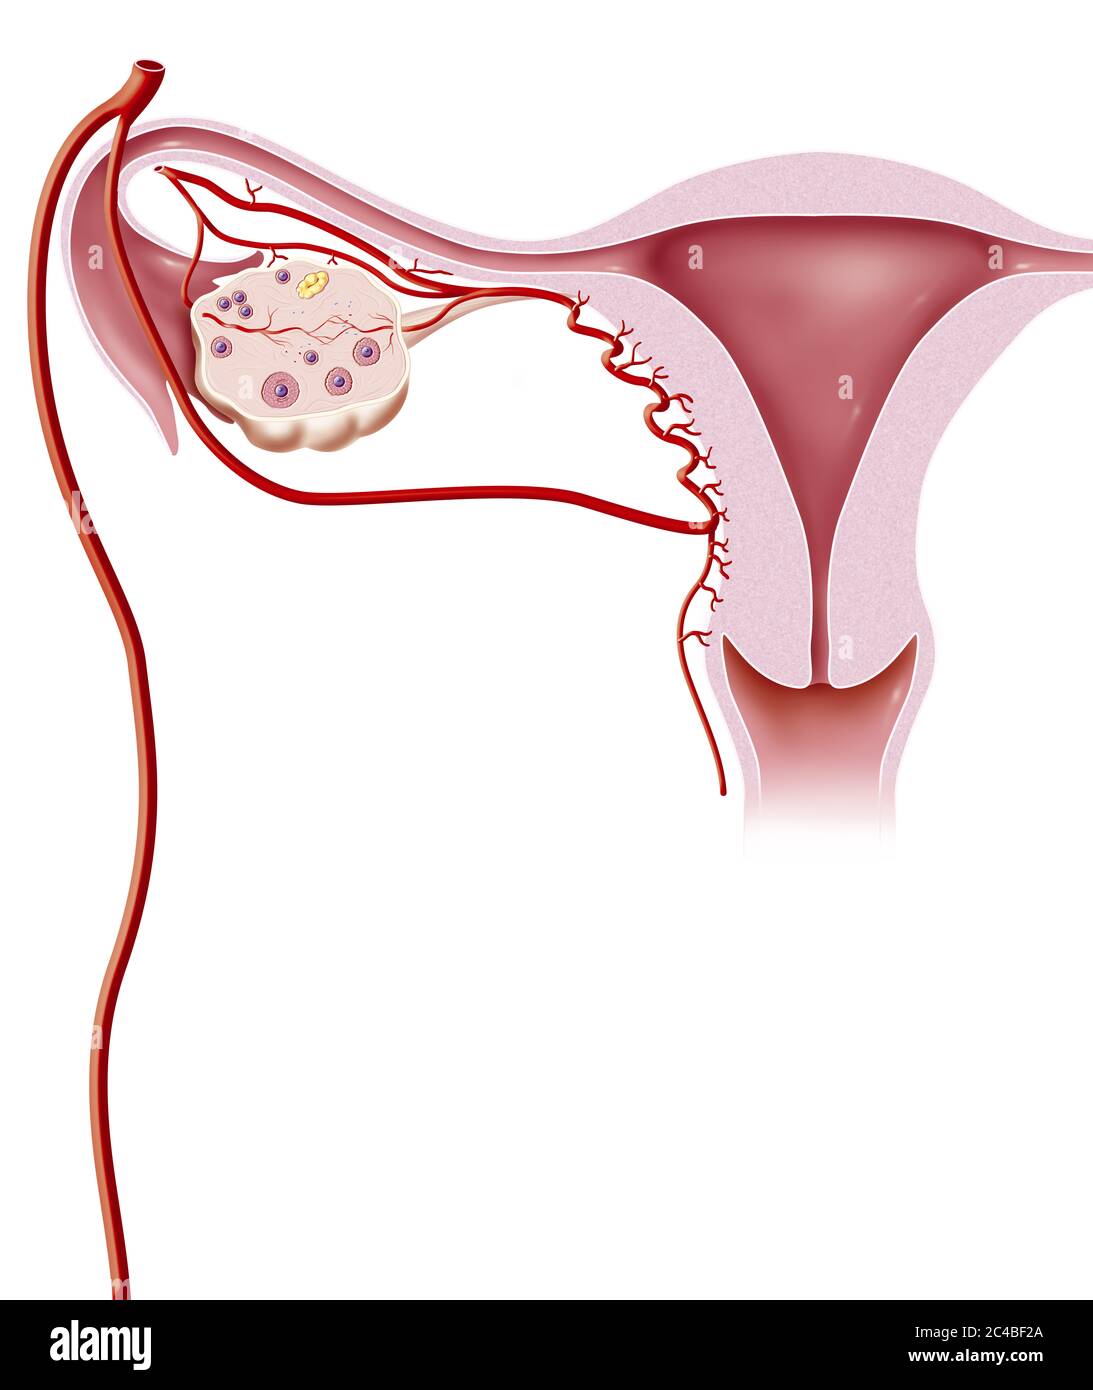 Uterus vascularization, uterine artery, ovary, ovarian artery. The uterine artery arises from the primary iliac artery having given two branches, an e Stock Photo